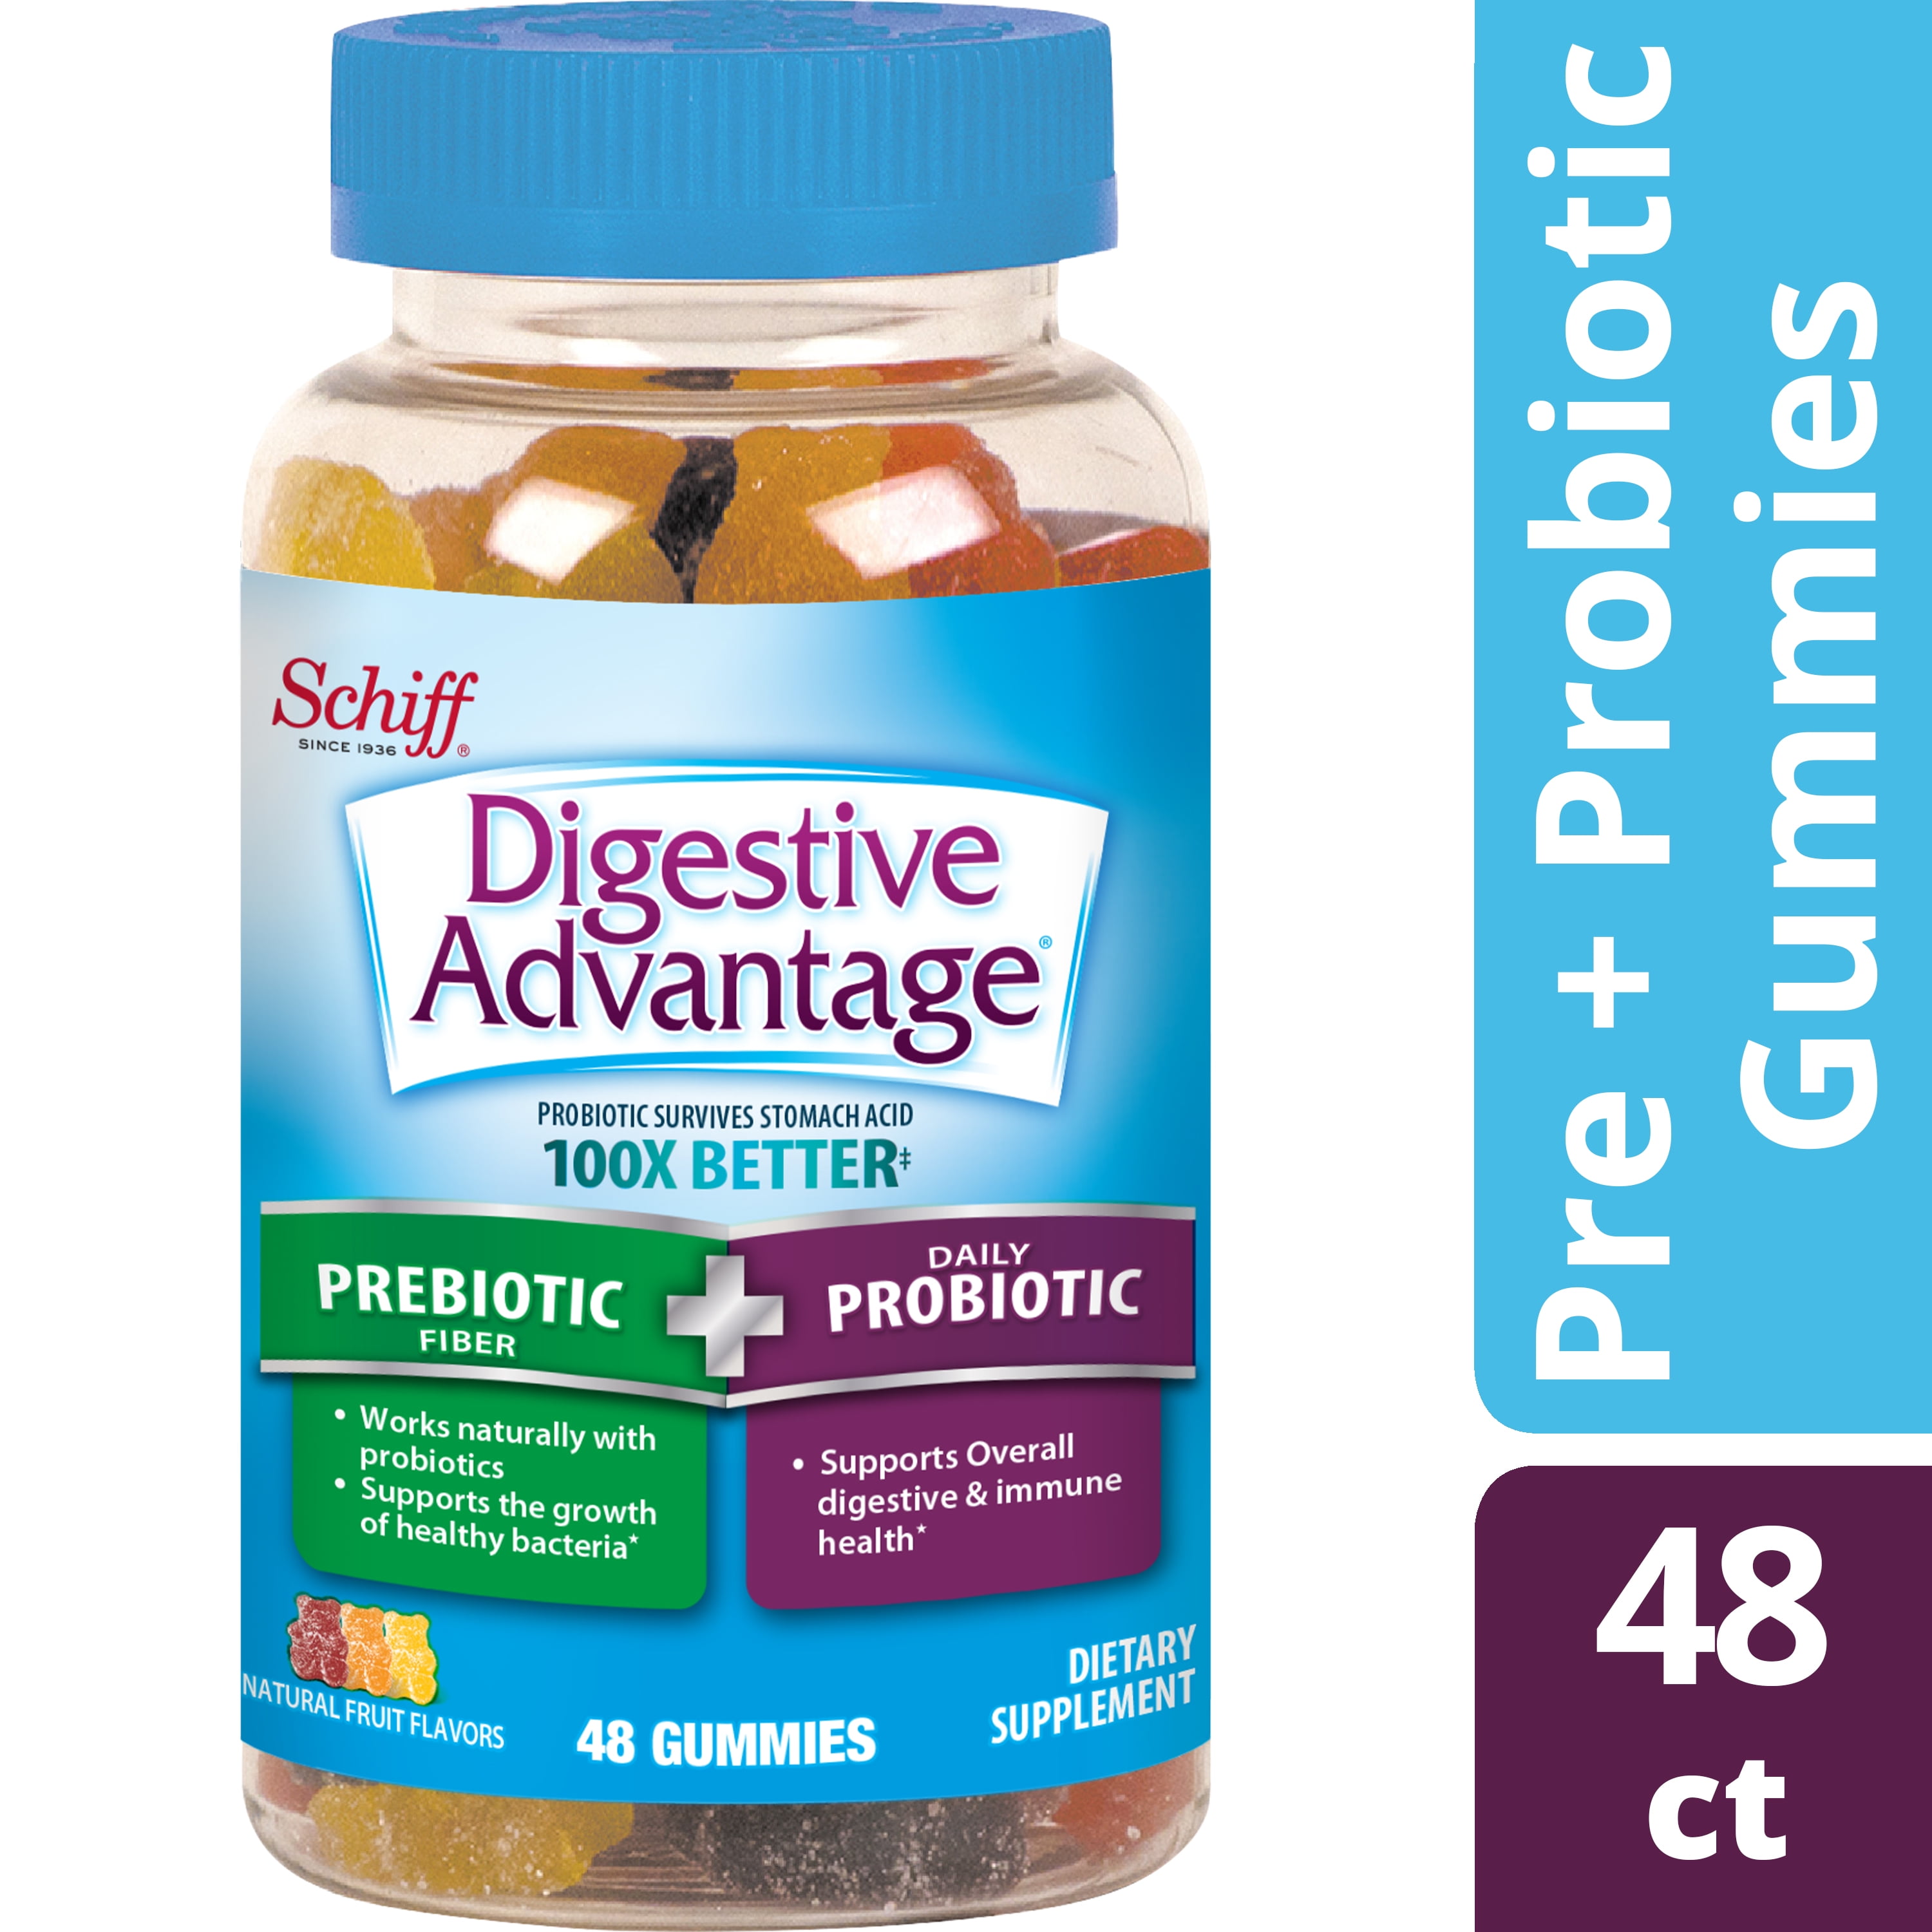 Buy Digestive Advantage Prebiotic Fiber Plus Daily Probiotic Gummies